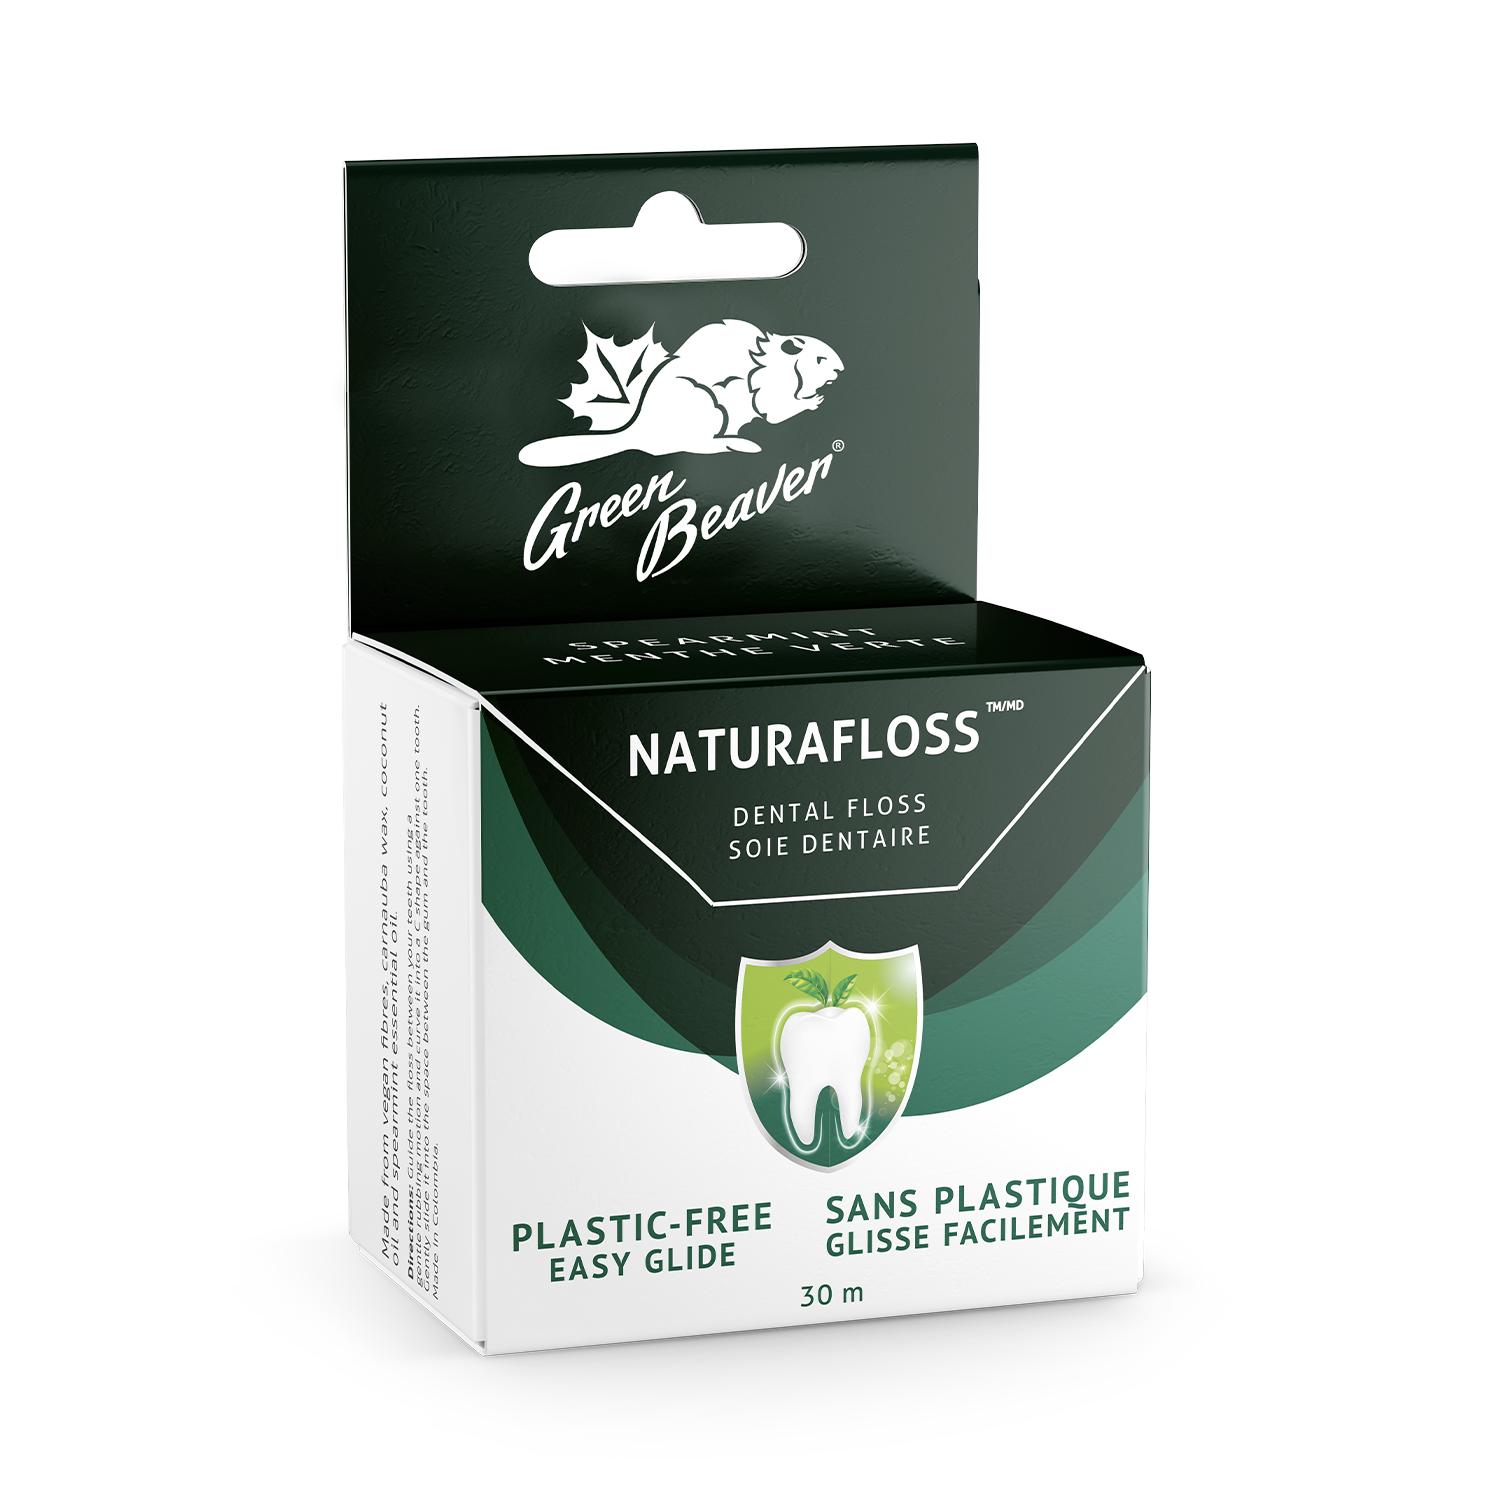 NaturaFloss™ Dental Floss - Spearmint |30m| - ProCare Outlet by Green Beaver